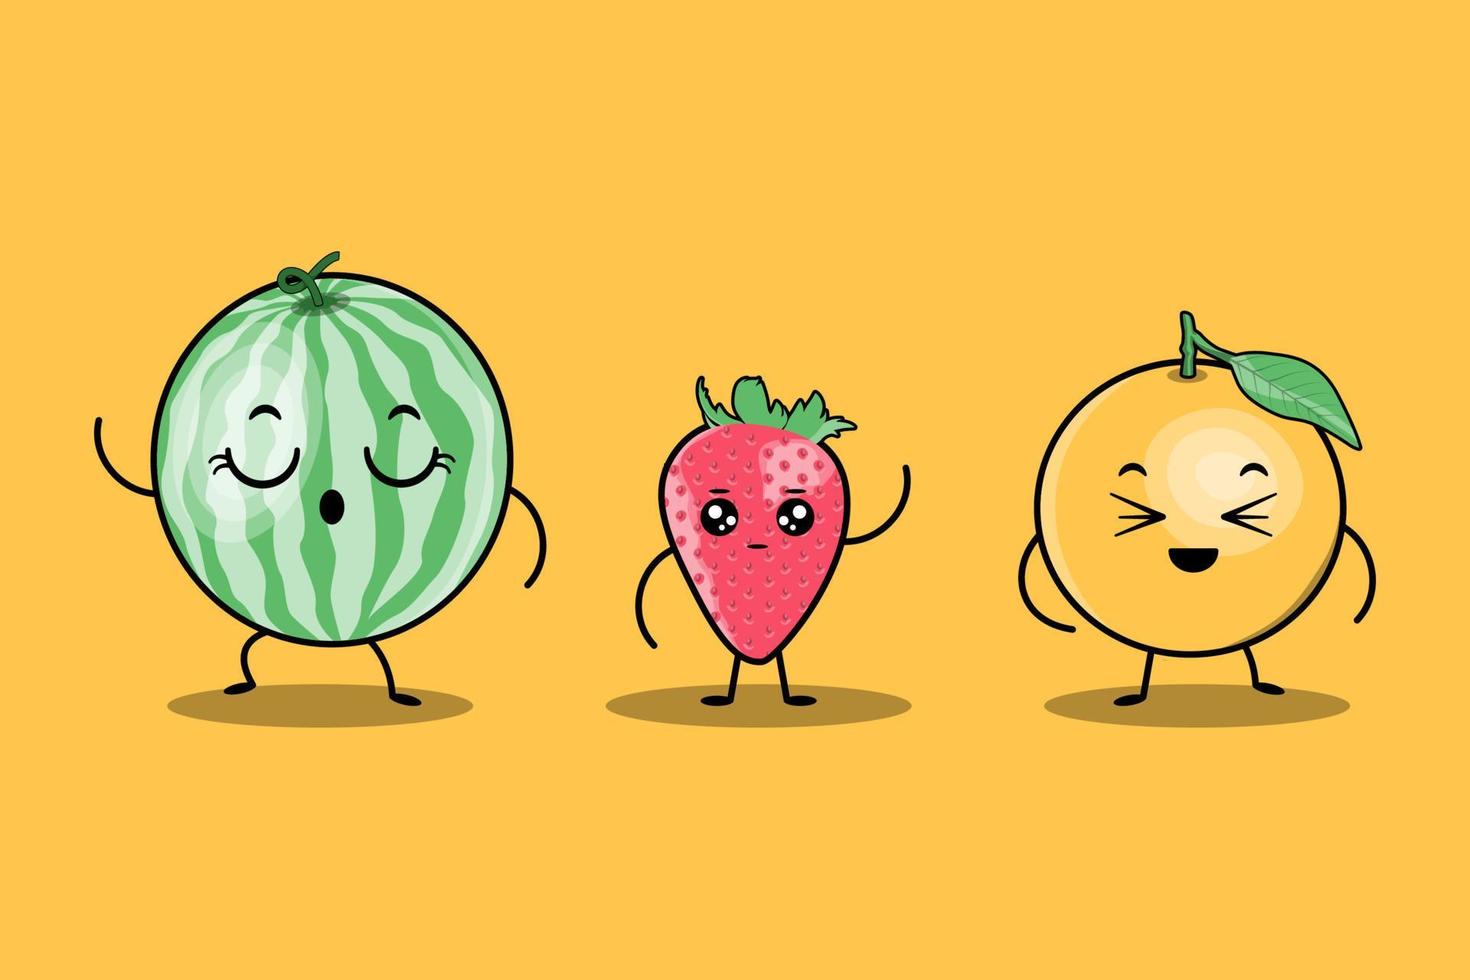 vecteur de personnages de dessins animés de fruits kawaii coloré mignon serti de nombreuses expressions